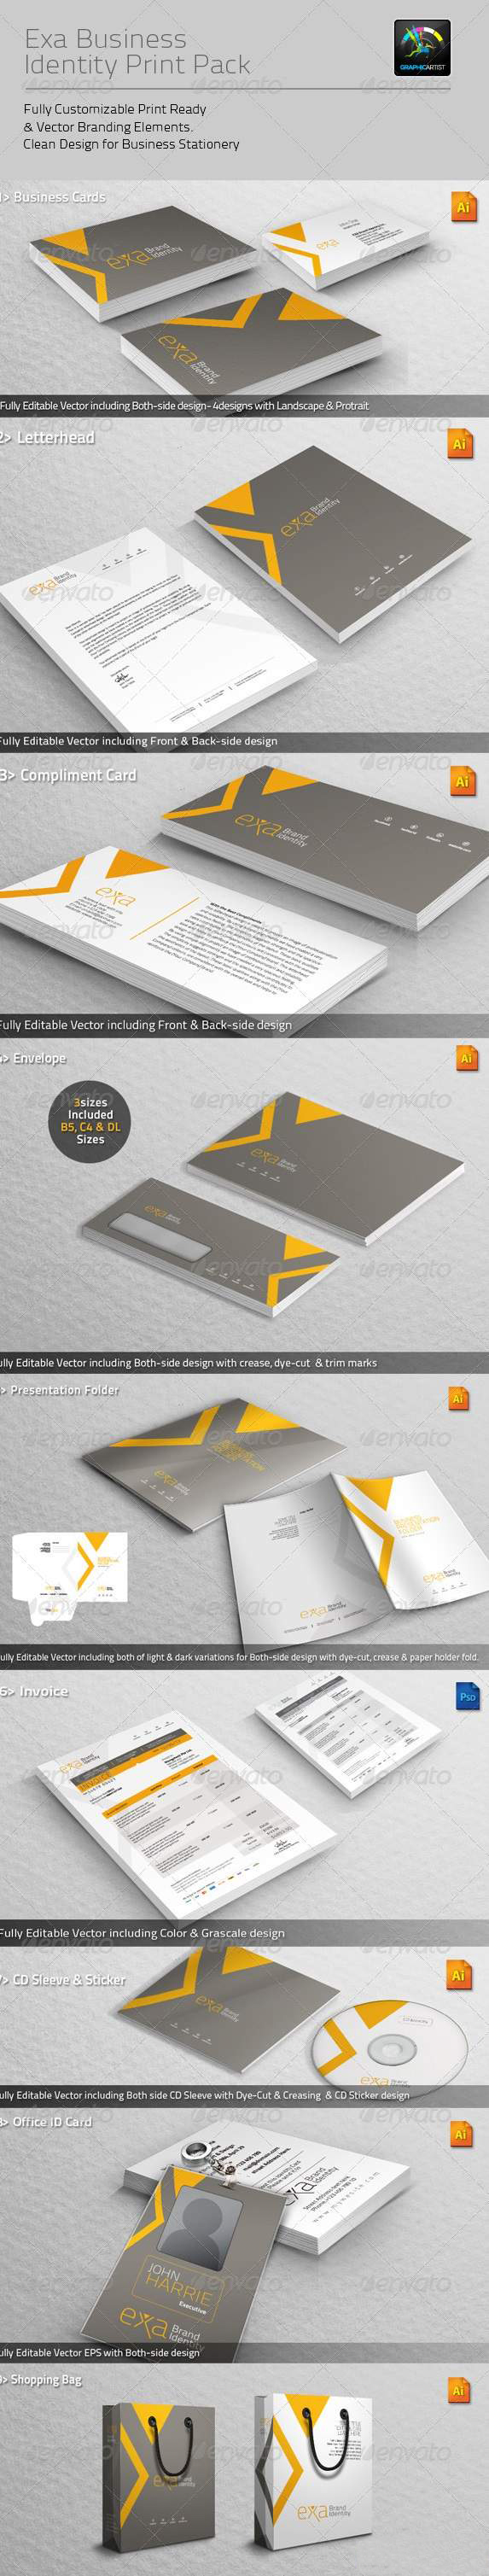 Exa Business Identity Print Pack创意极简的品牌包装合辑下载[ai,psd,indd,pptx,eps]